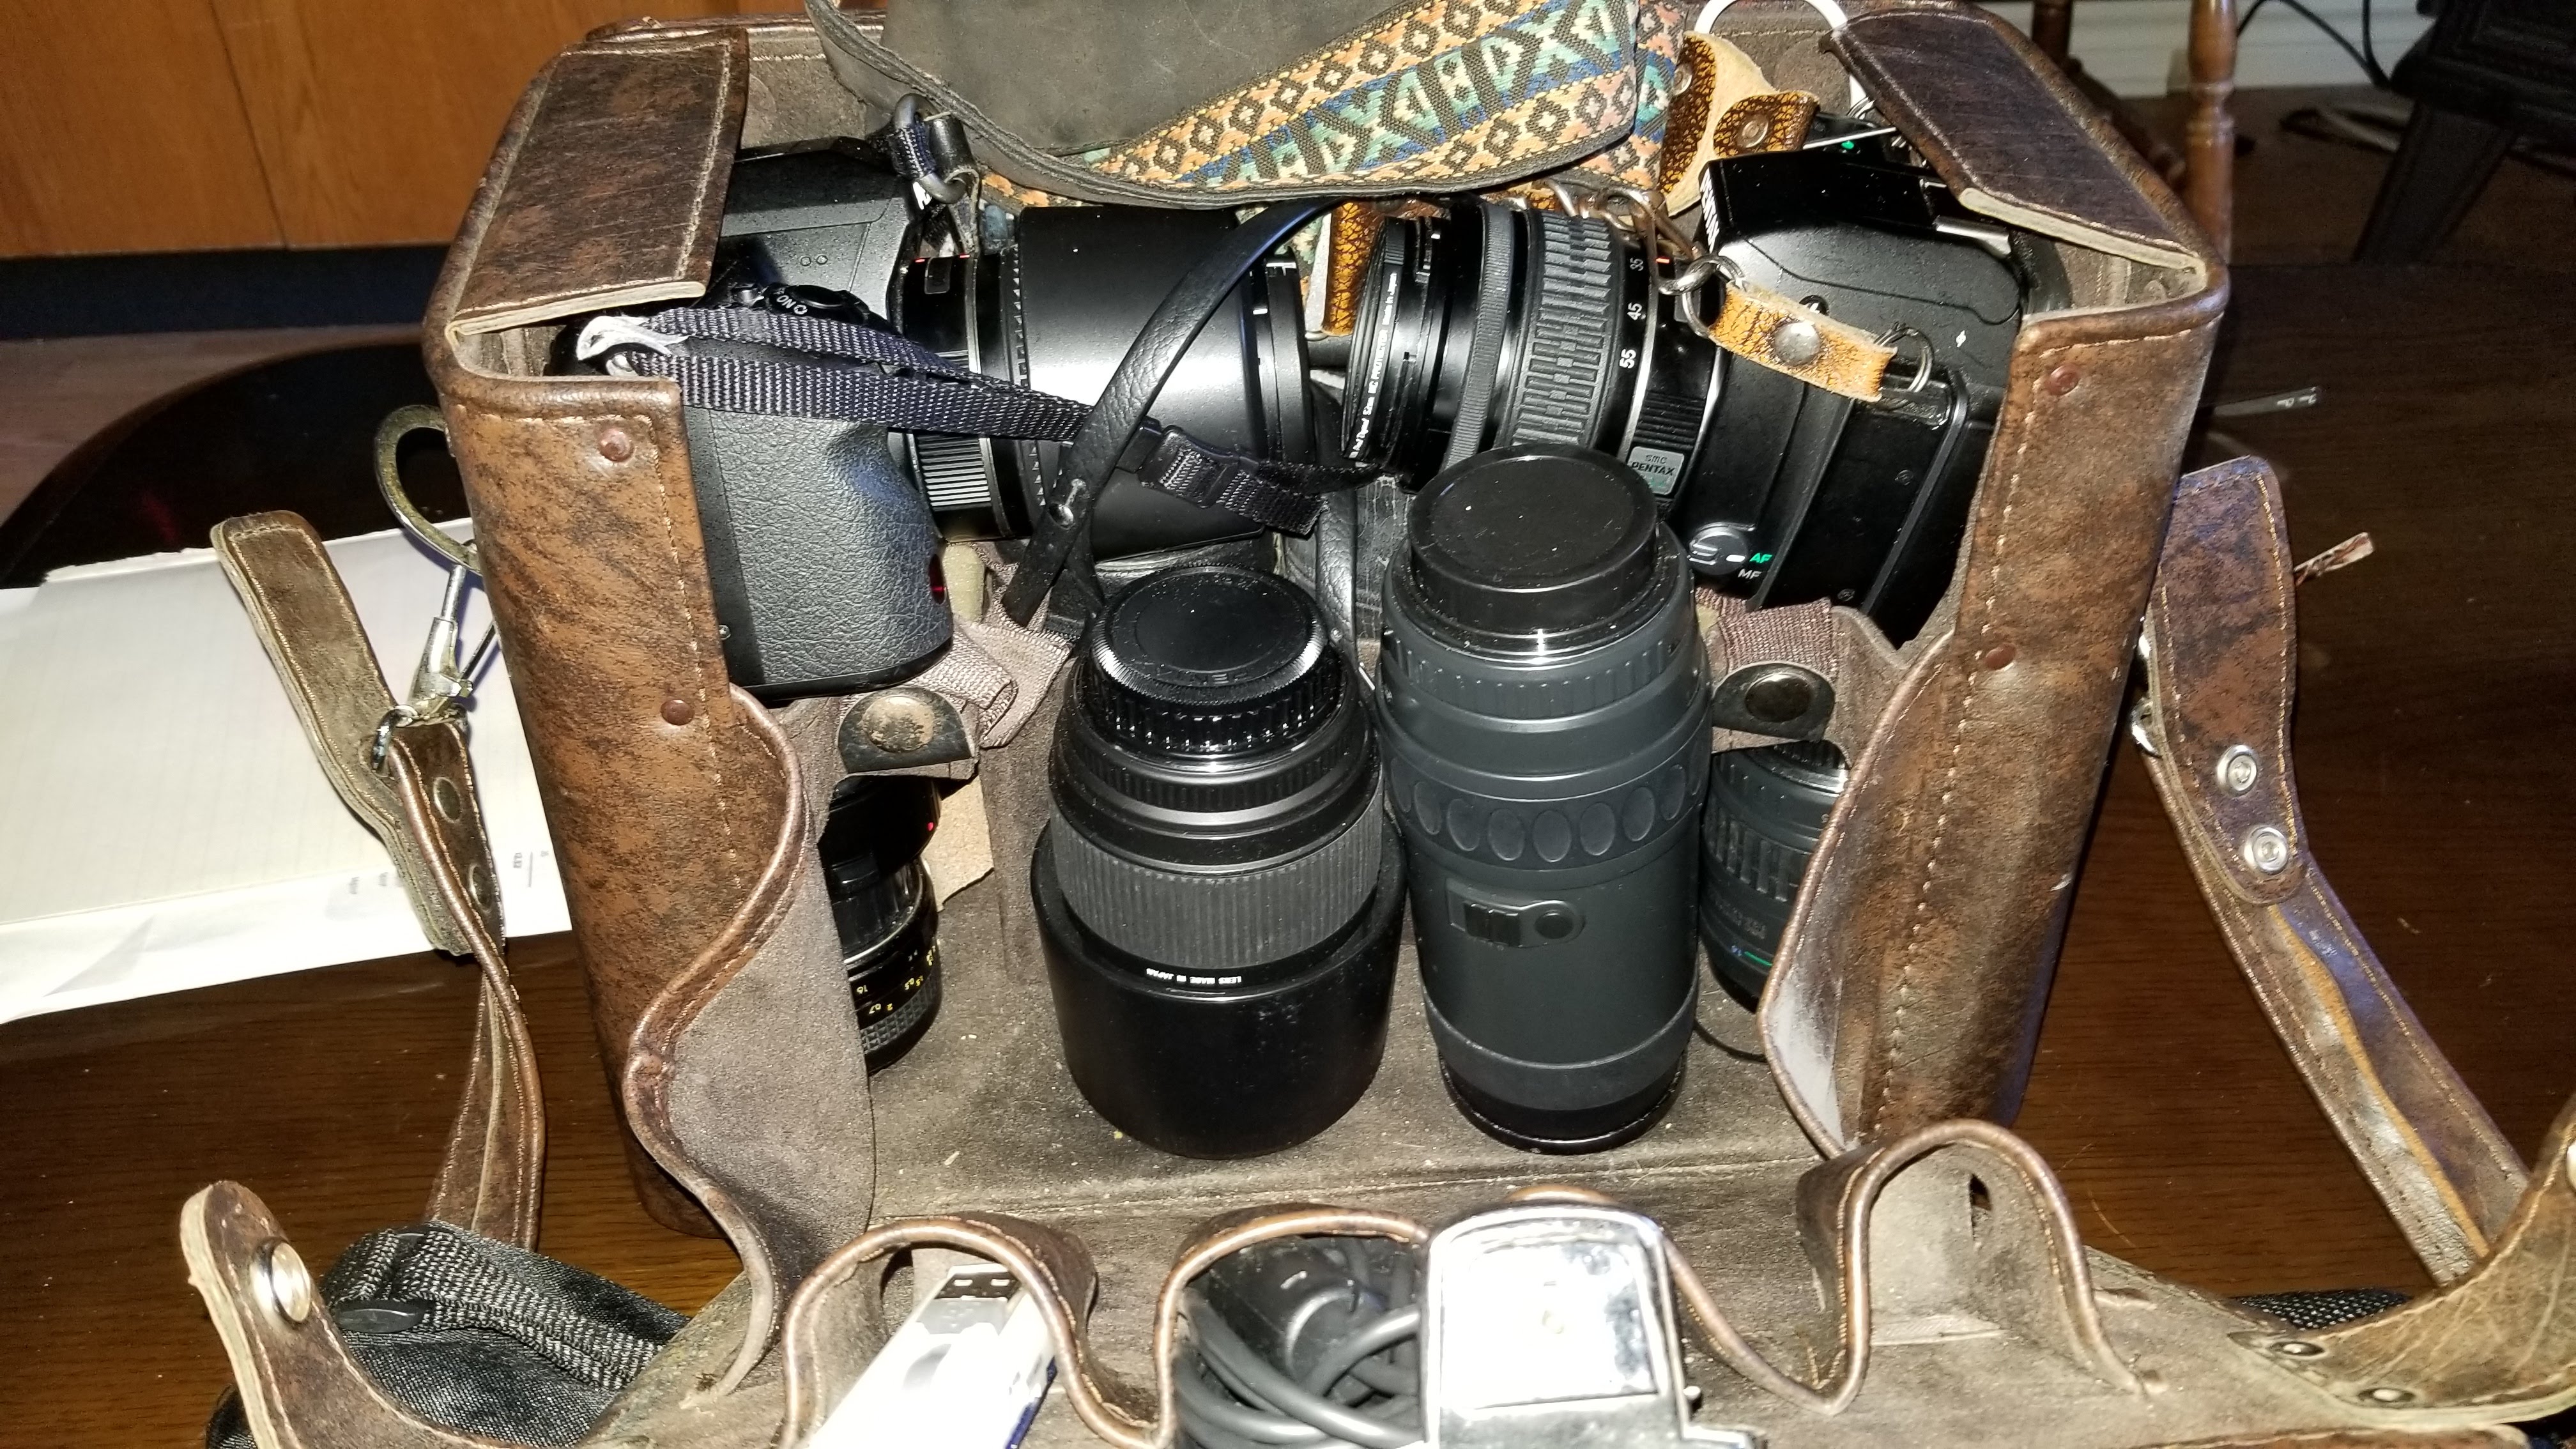 Pentax Lenses and My DA 18-135mm WR